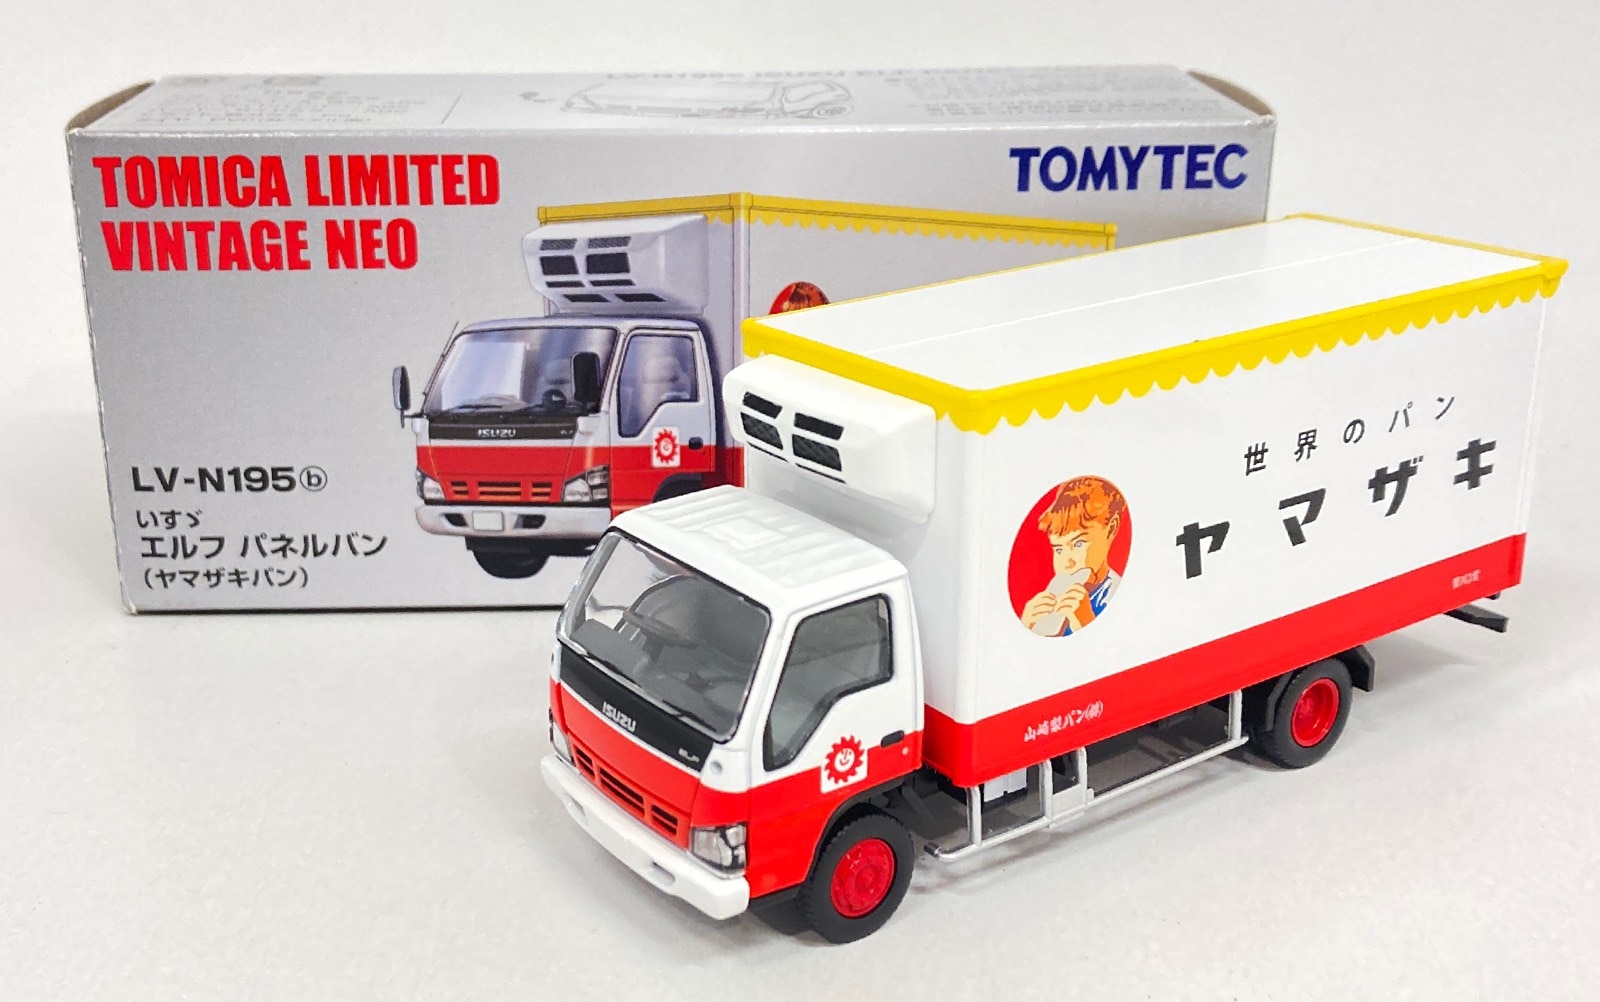 Tomica Limited Vintage Neo Tomytec LV-N195b Isuzu ELF Panel Van